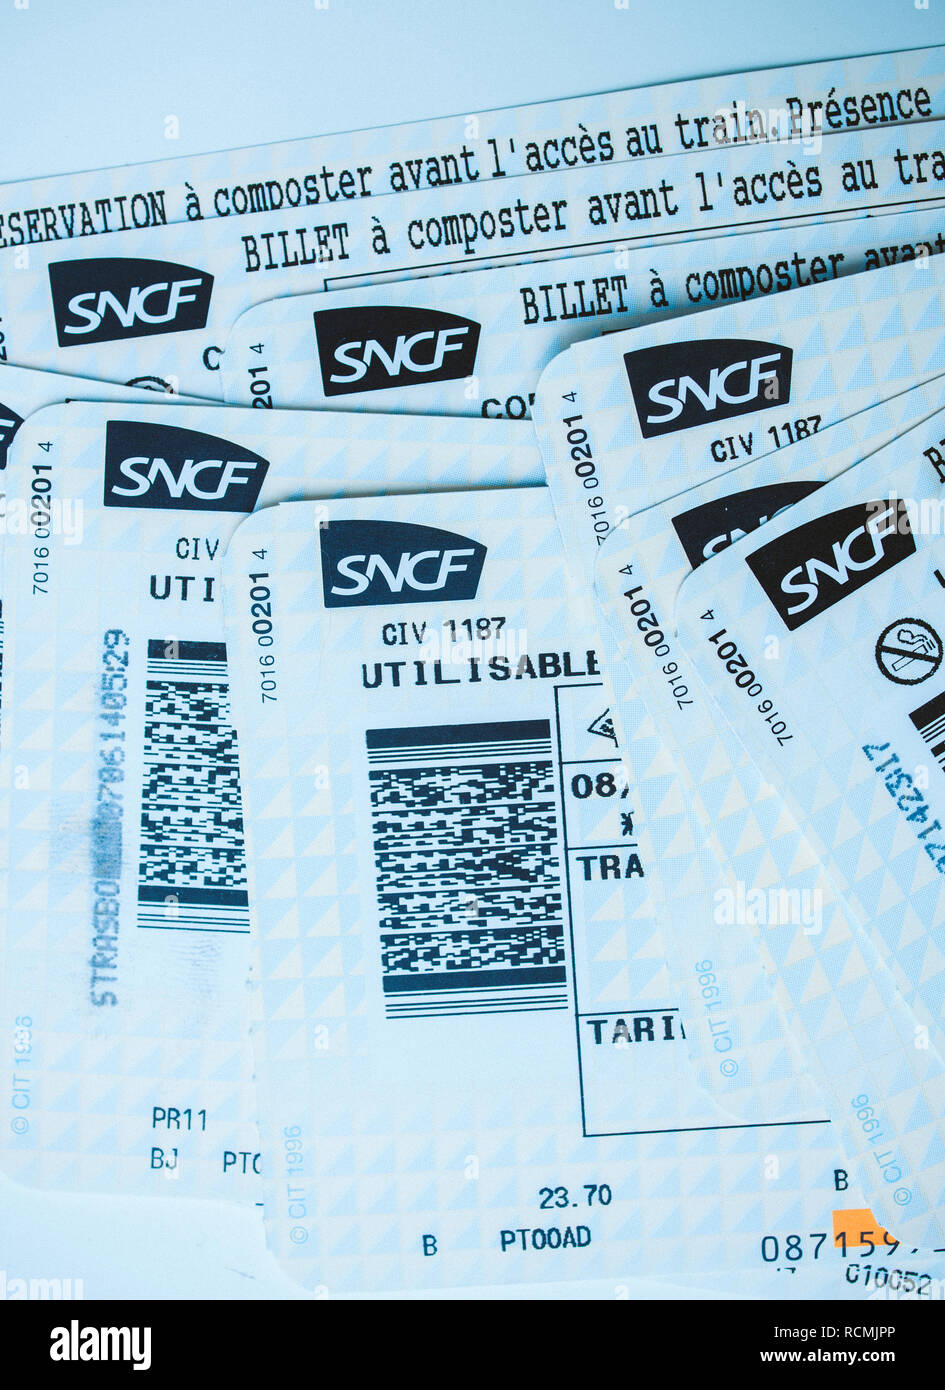 PARIS, FRANCE - JAN 14, 2015: Stack of multiple SNCF (Societe nationale des chemins de fer francais) train tickets seen from above randomly arranged on a table blue tint  Stock Photo